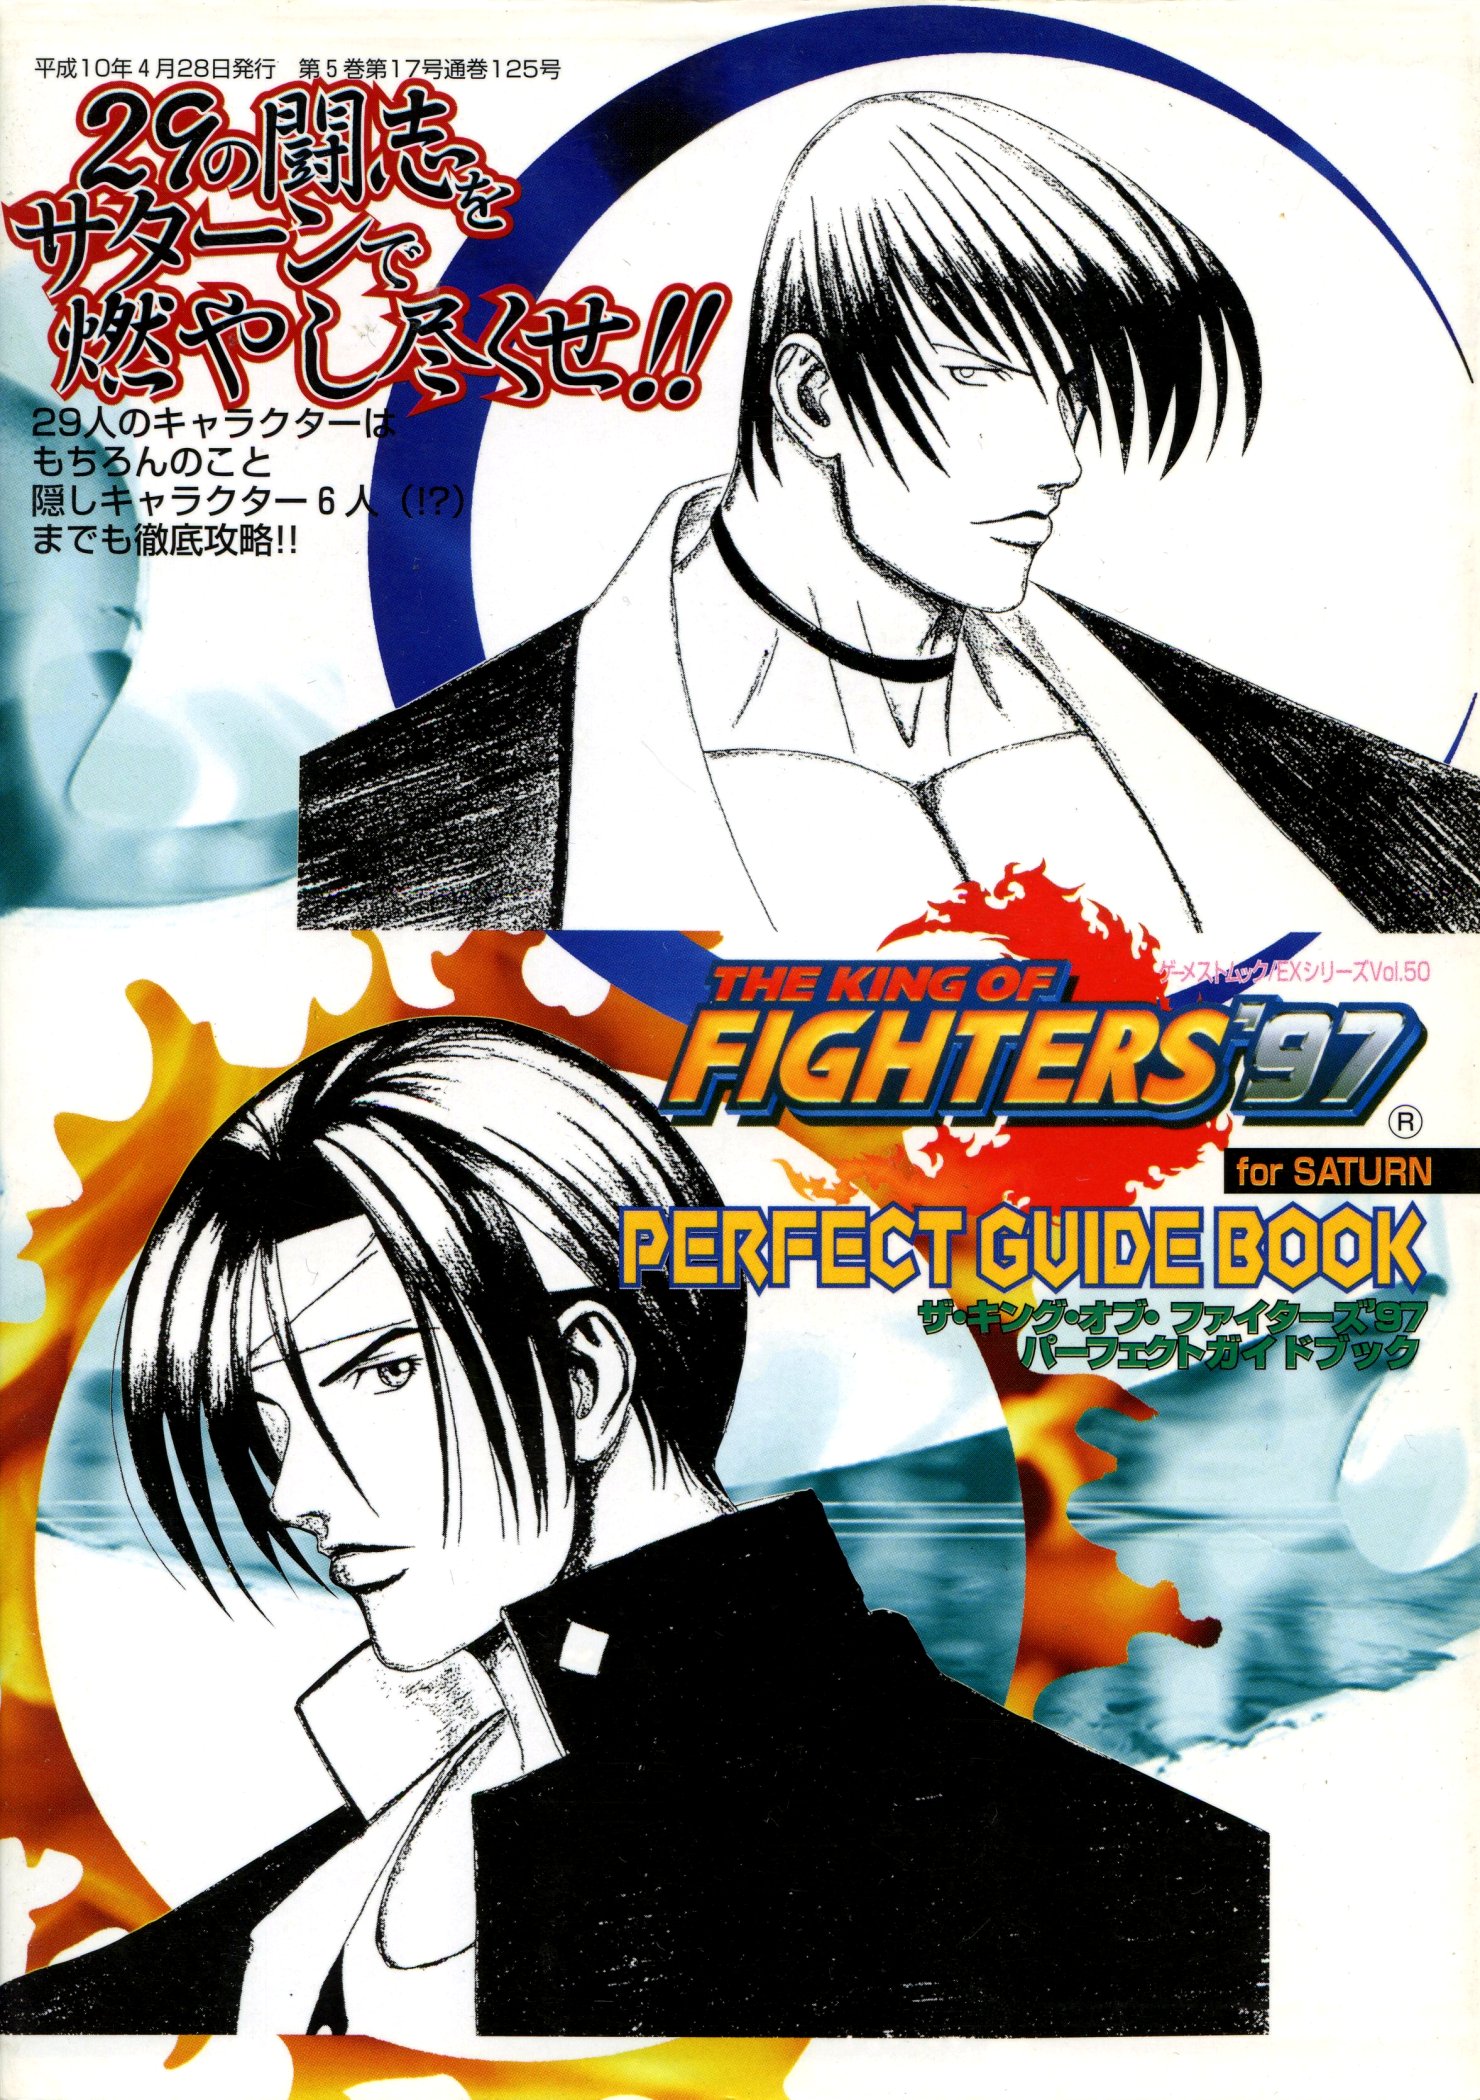 The King of Fighters '97 Perfect Guide Book - Sega Retro